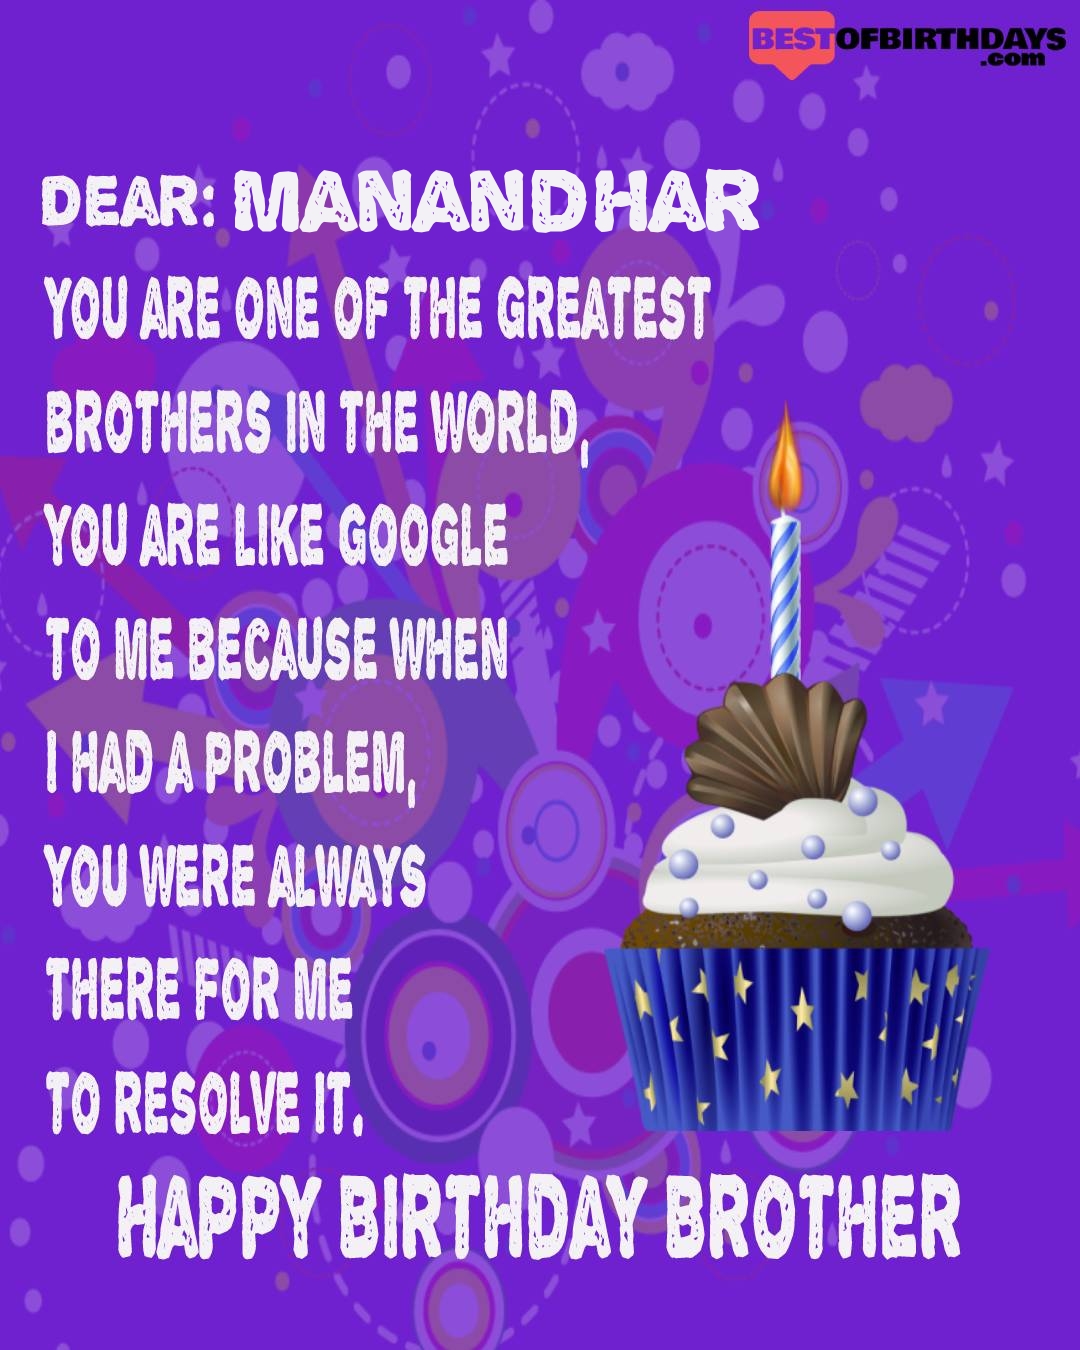 Happy birthday manandhar bhai brother bro